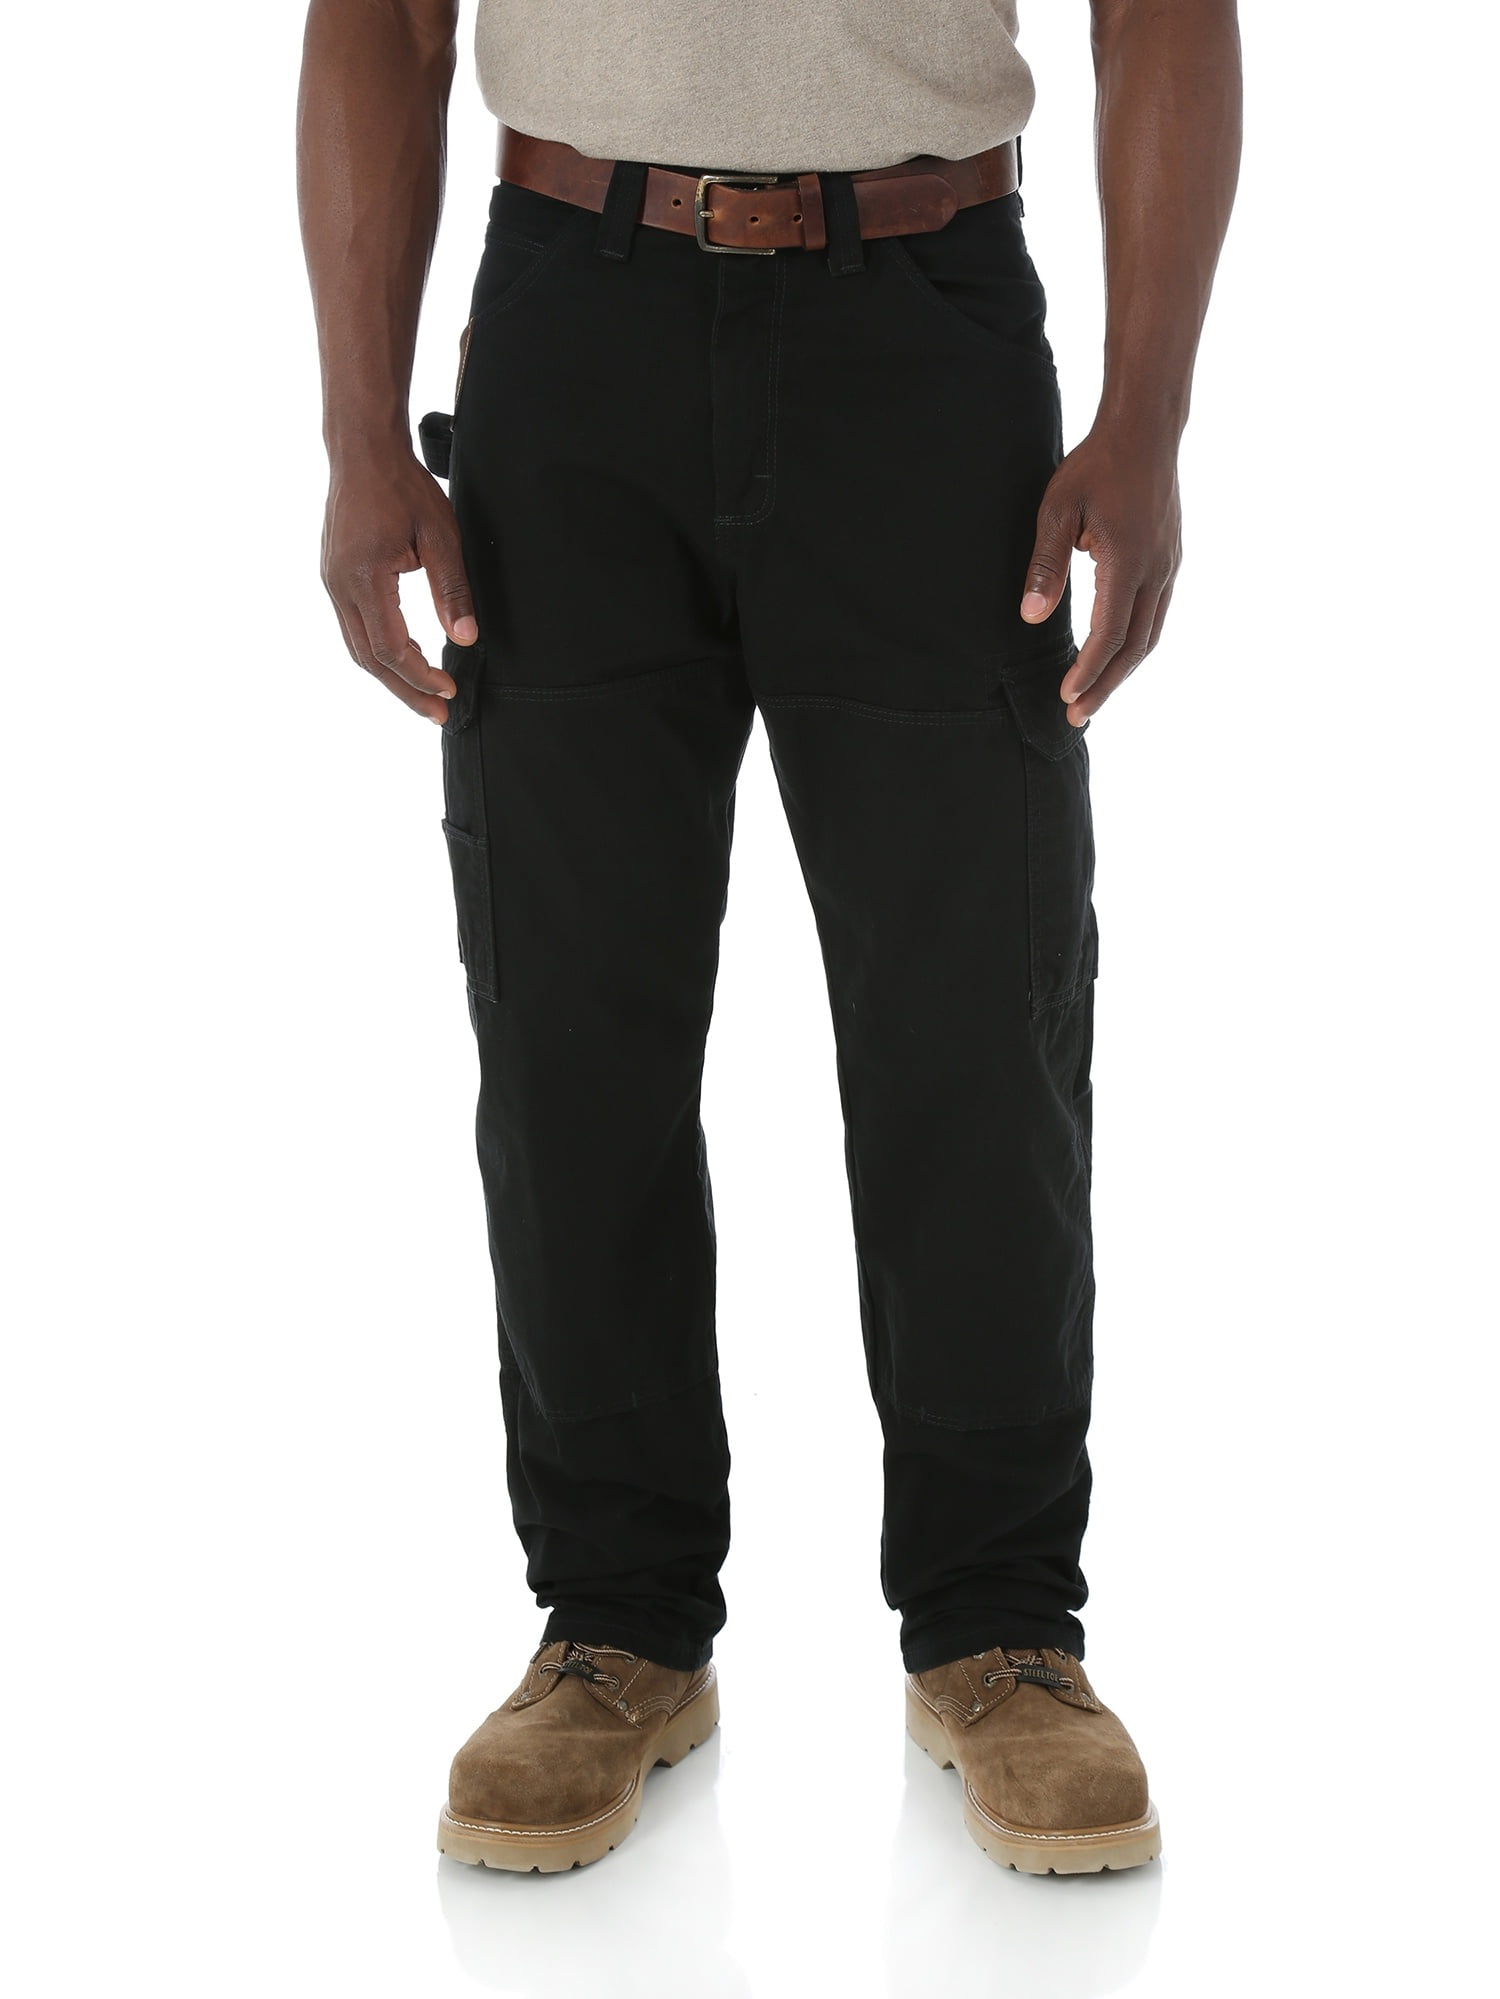 Wrangler Riggs Workwear Ranger Pants, Cotton/Ripstop 